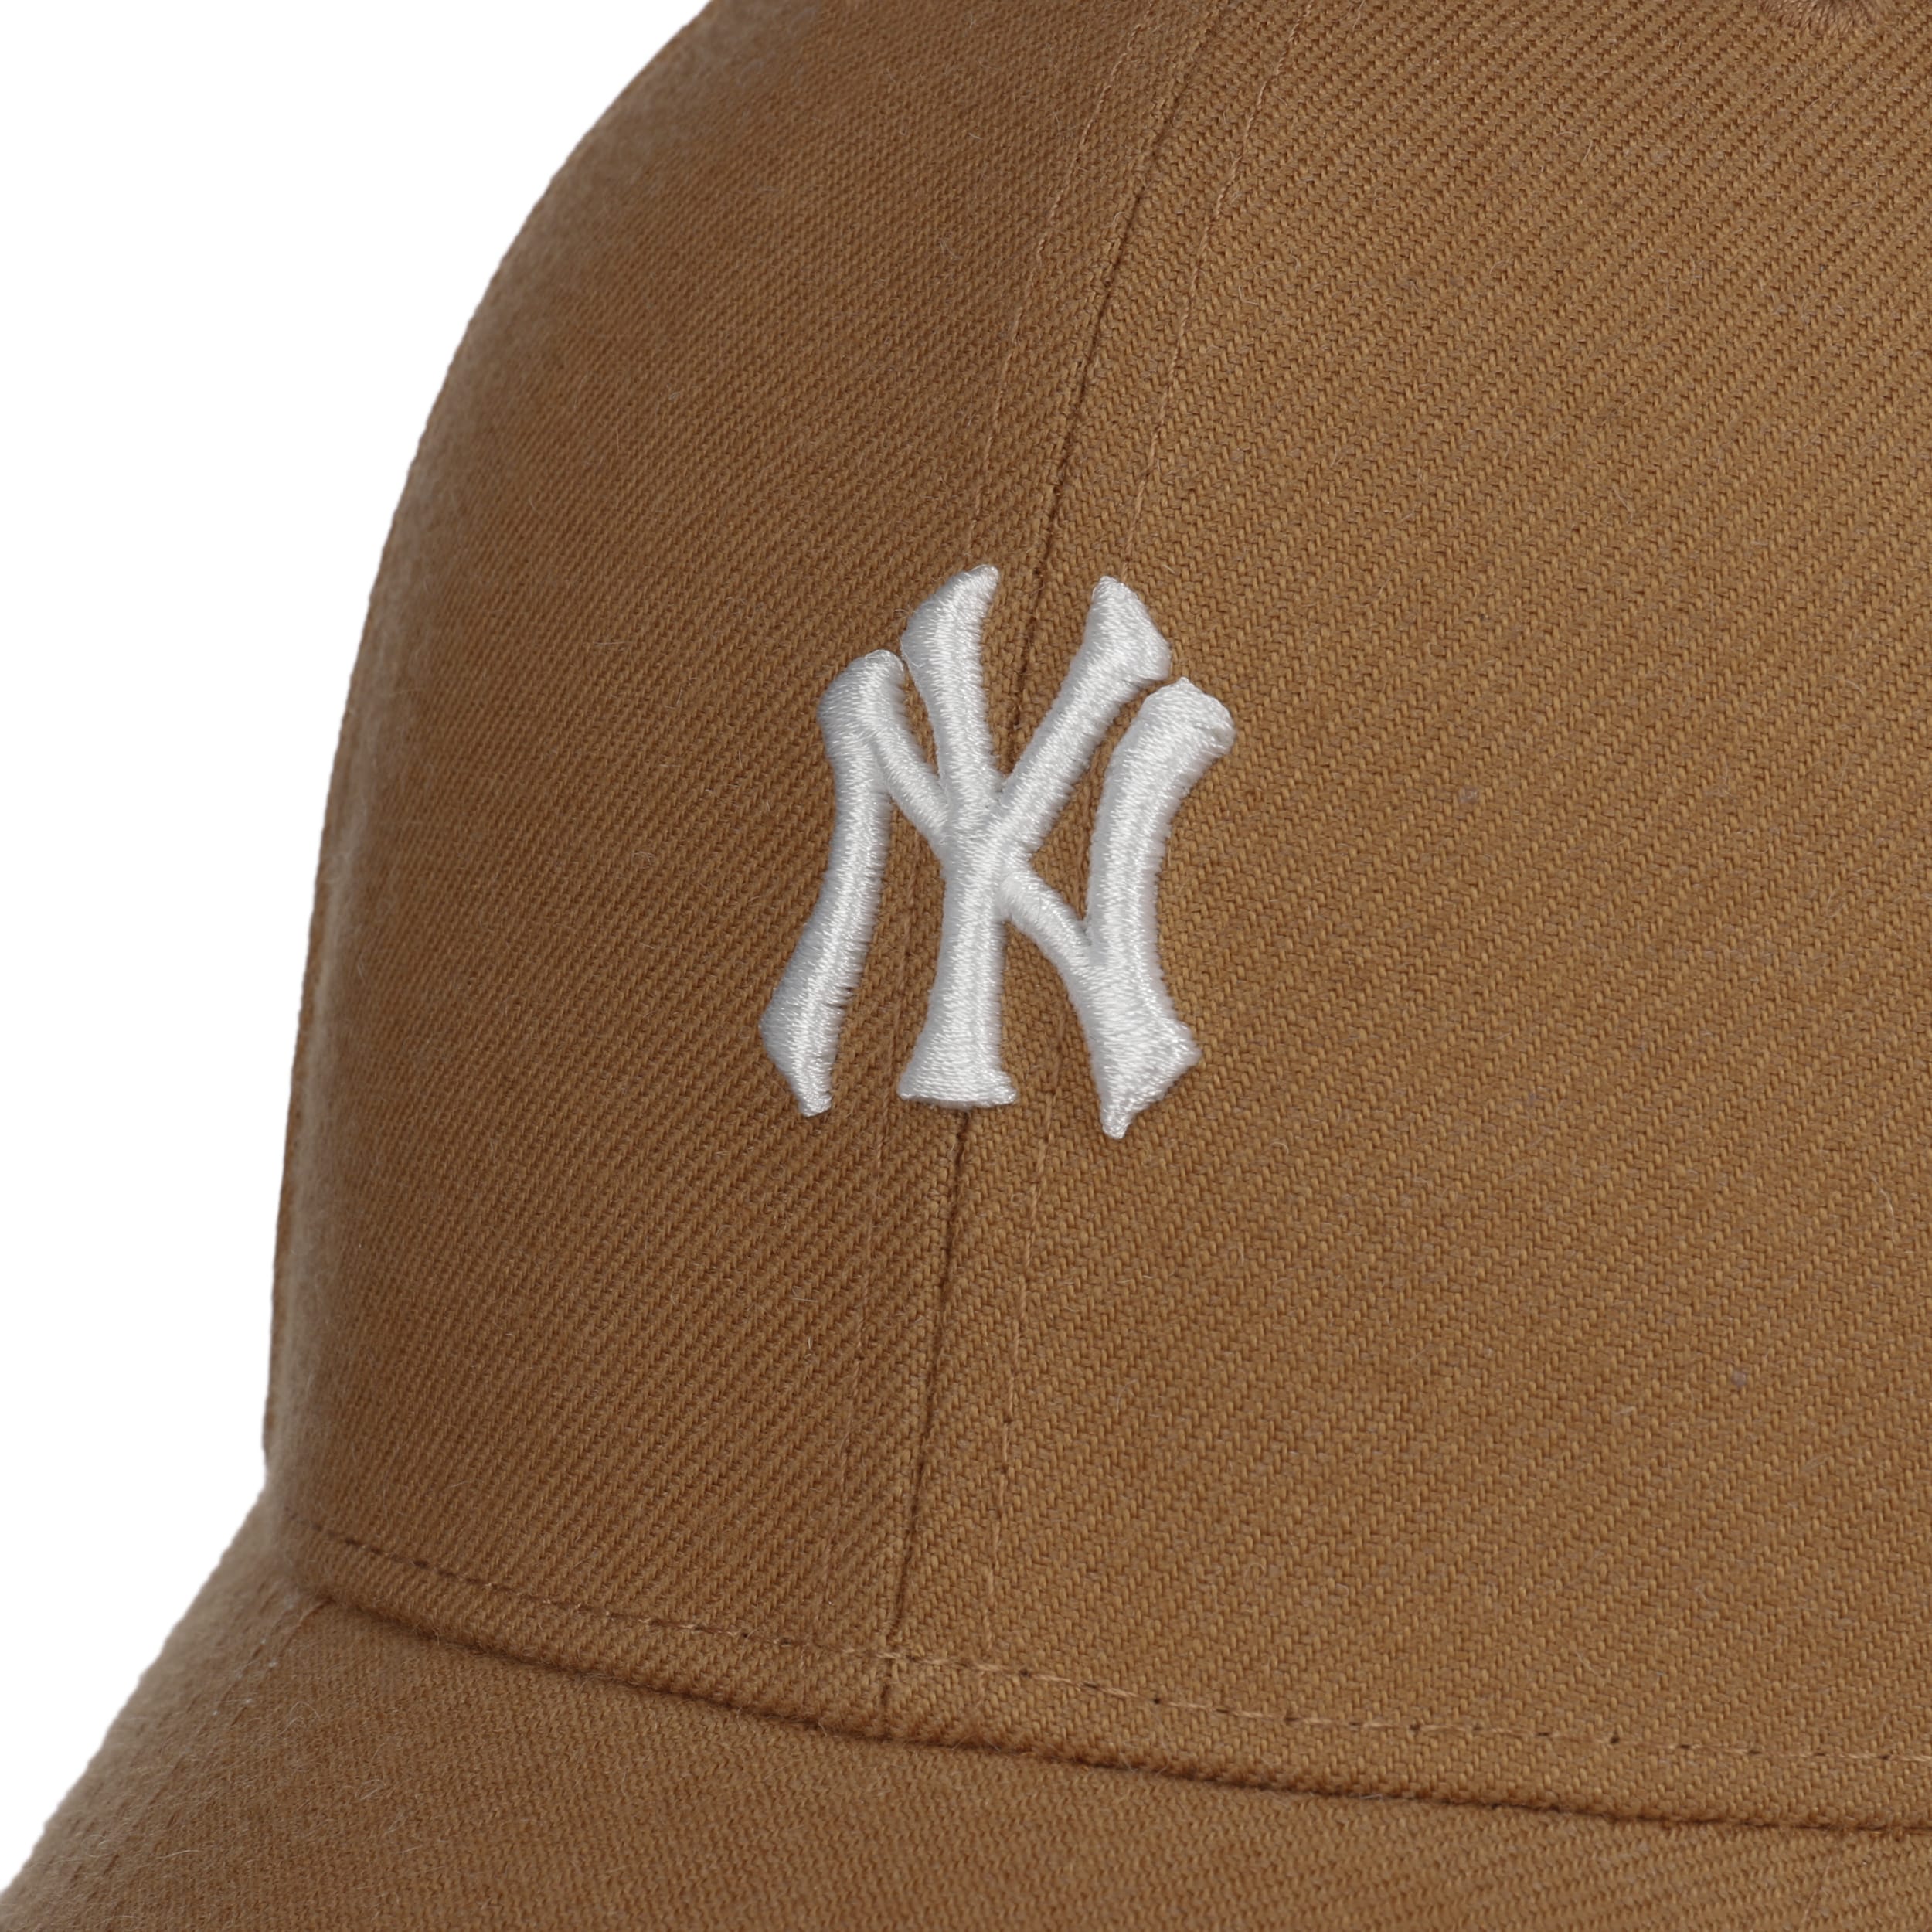 MLB Yankees Base Runner Snap Cap by 47 Brand - 28,95 €